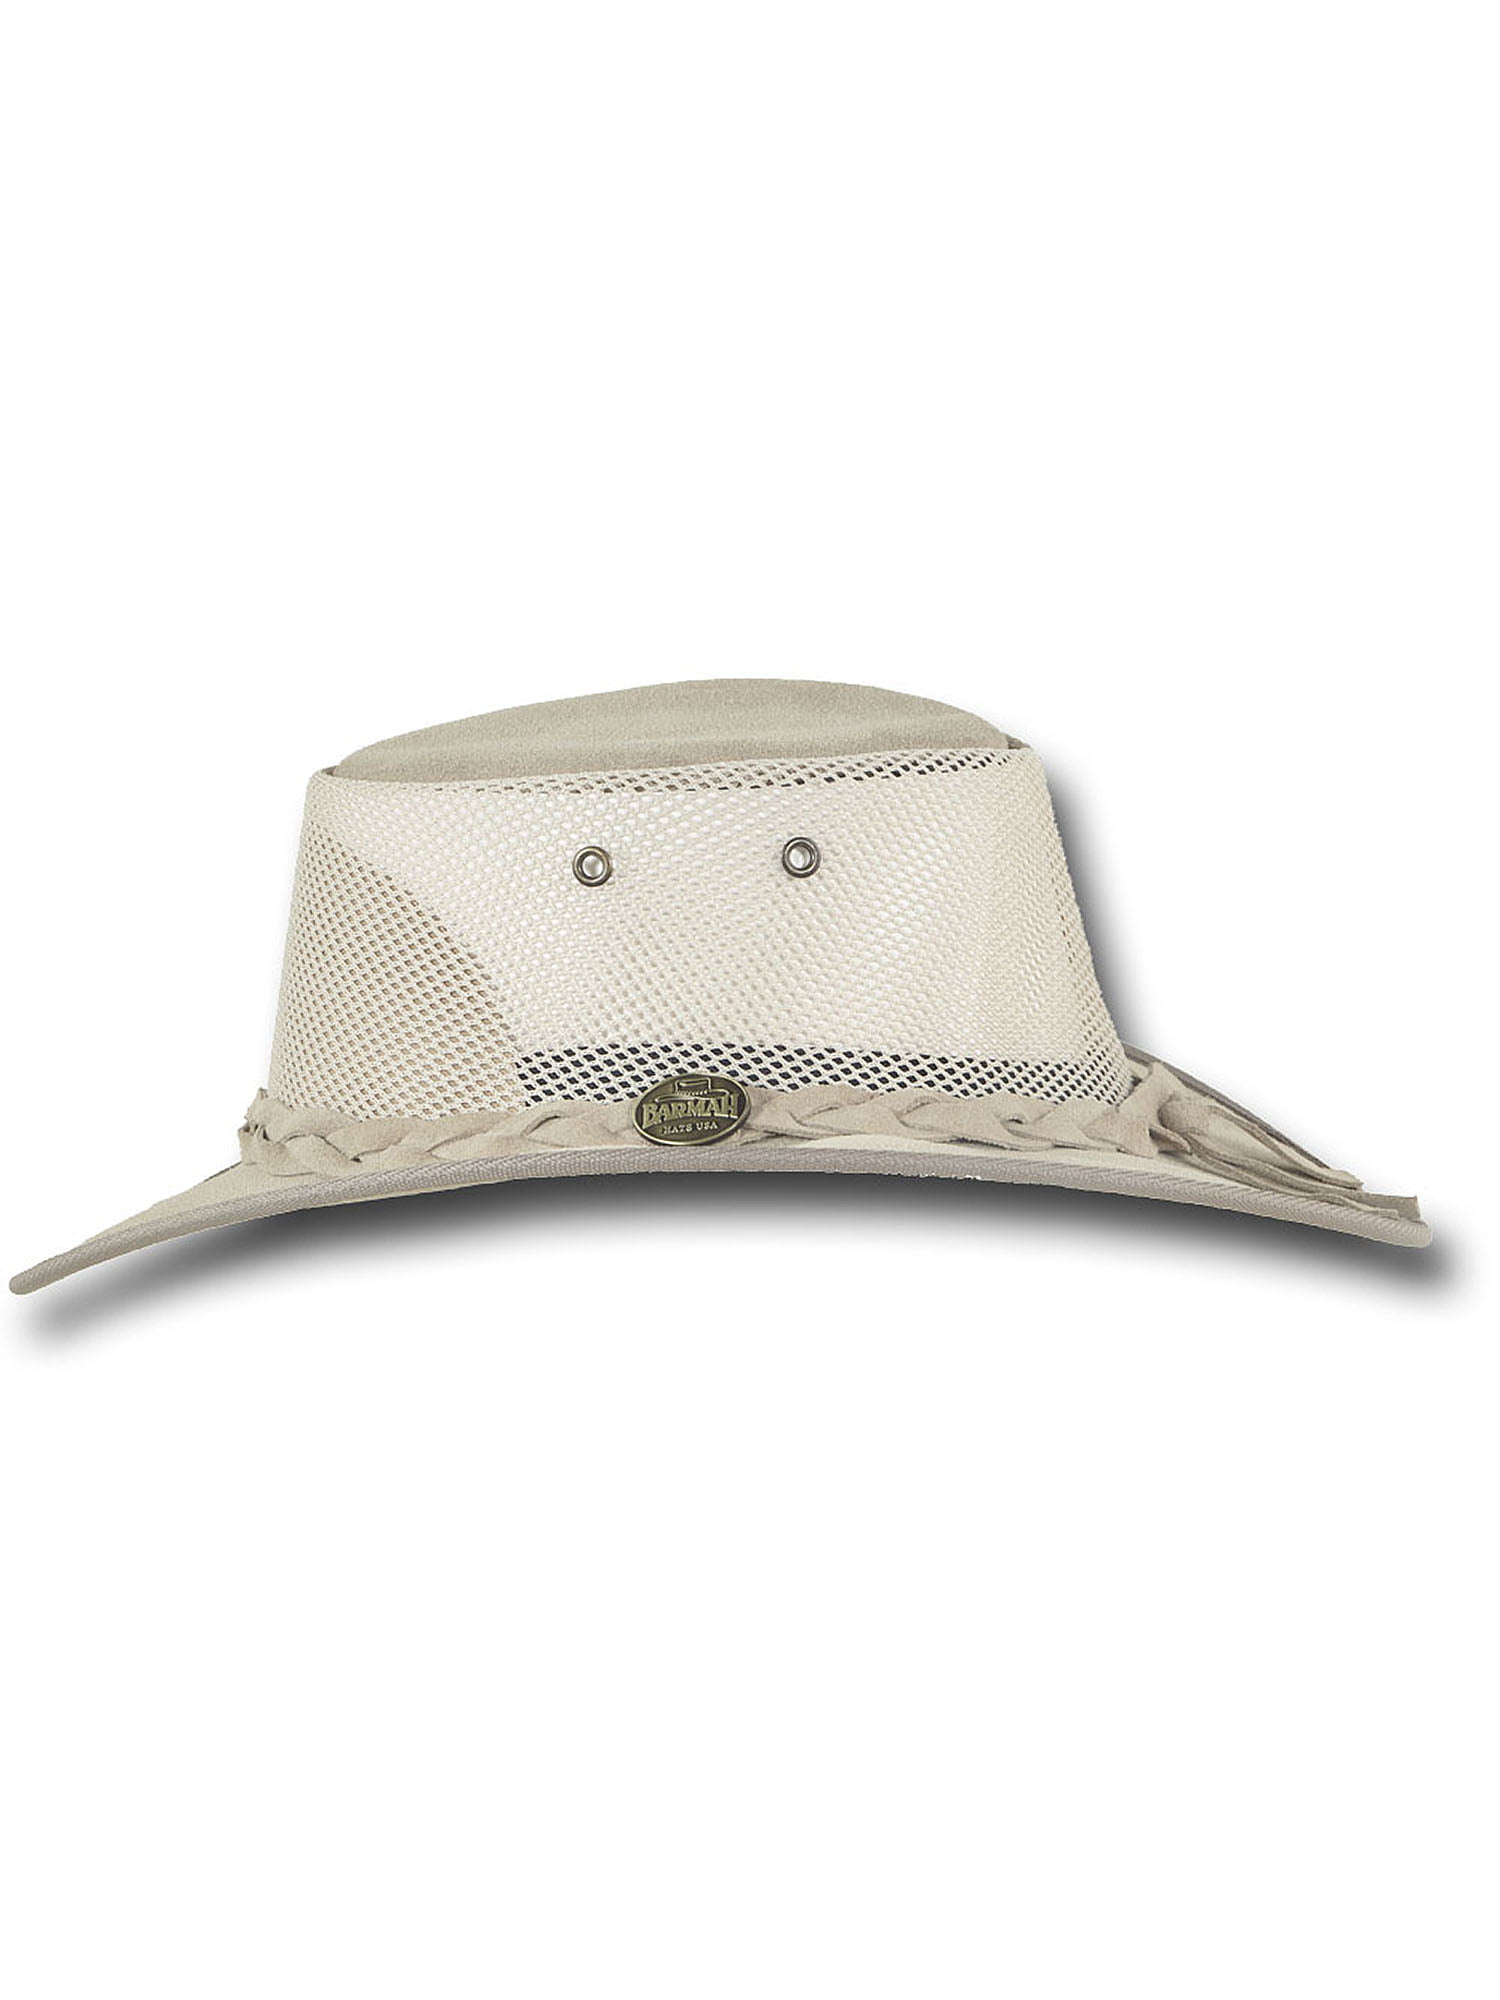 Item 1064 Barmah Hats Foldaway Cattle Suede Cooler Leather Hat 